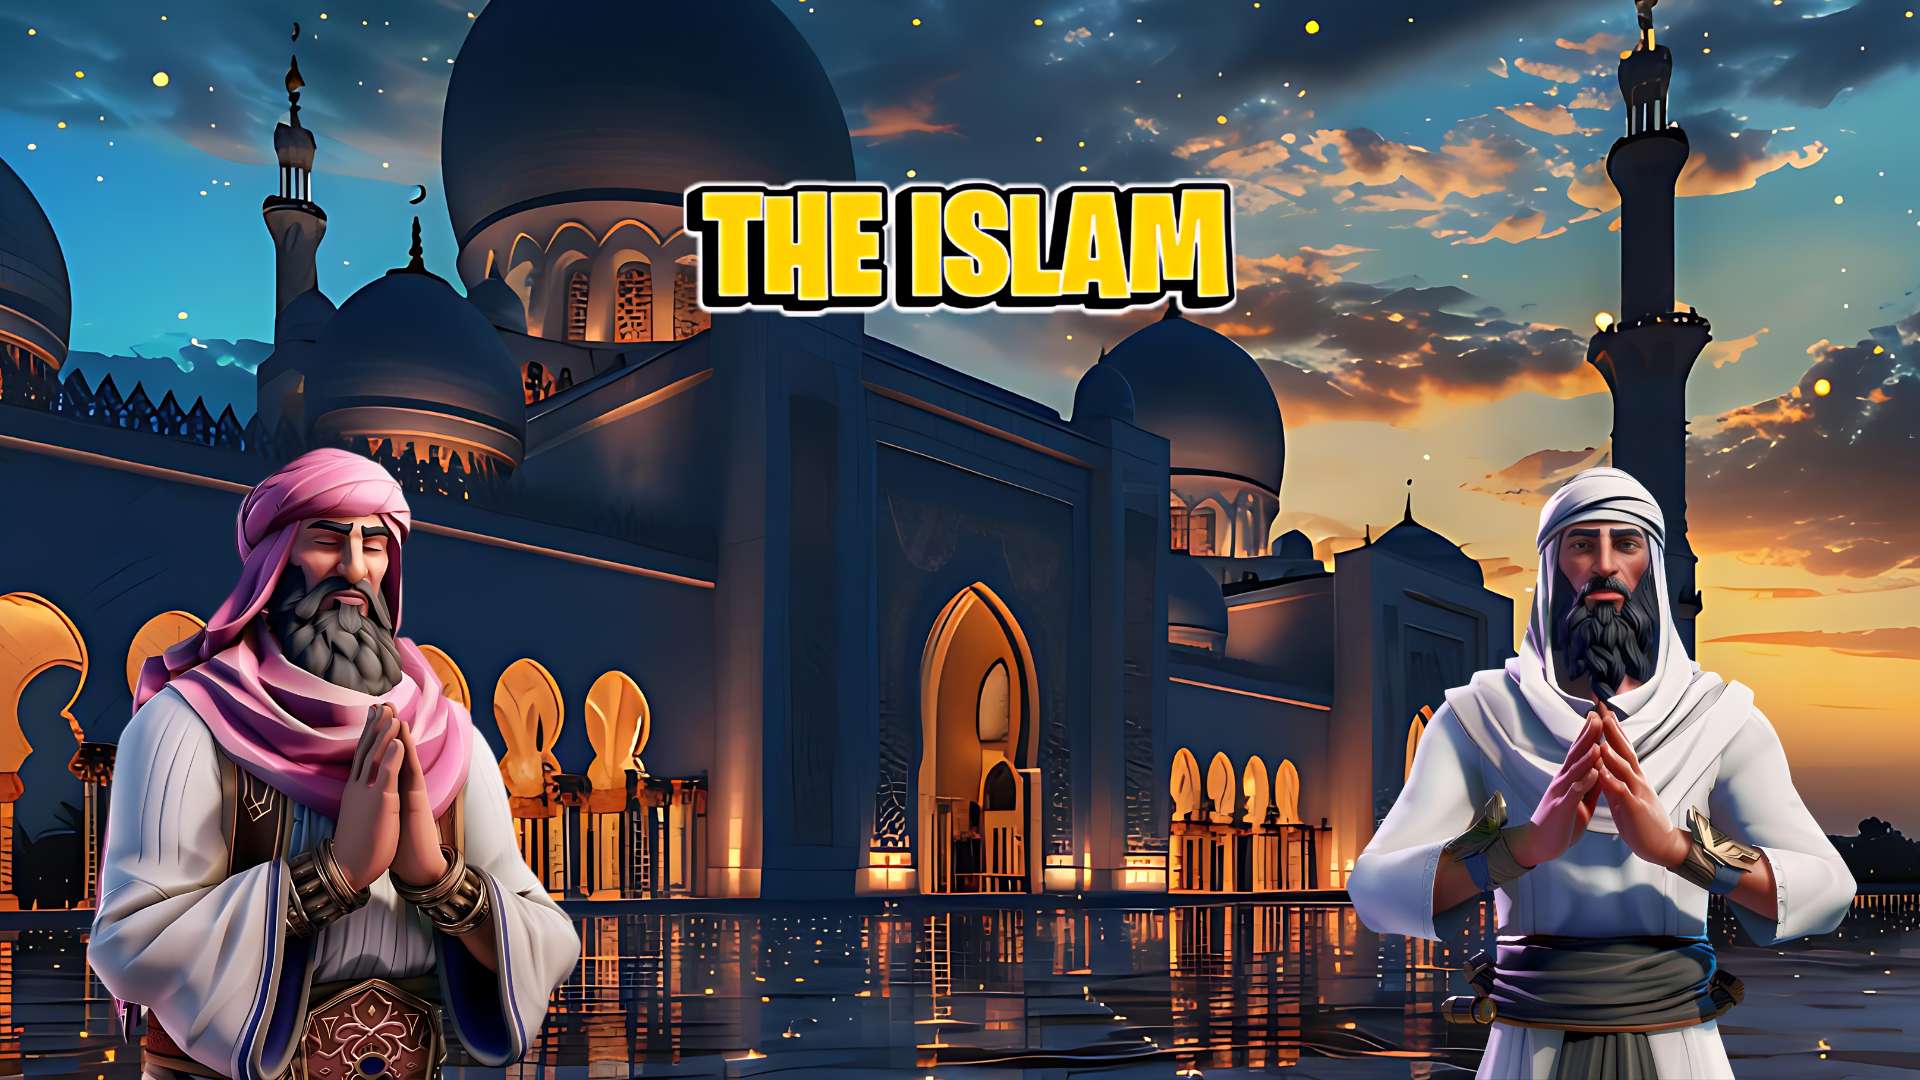 THE ISLAM